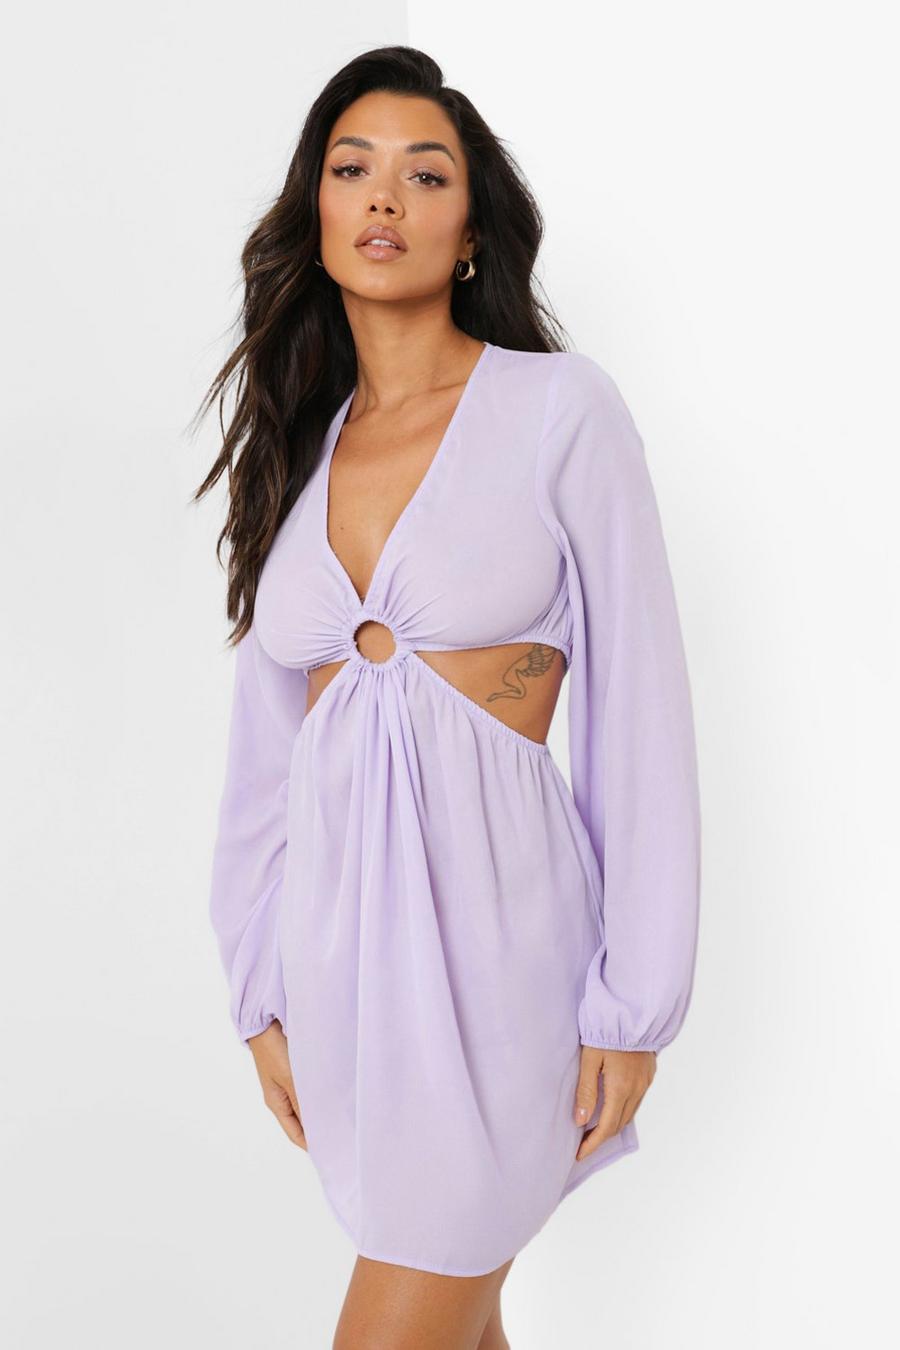 Lilac violet Chiffon O-ring Detail Cut Out Beach Dress